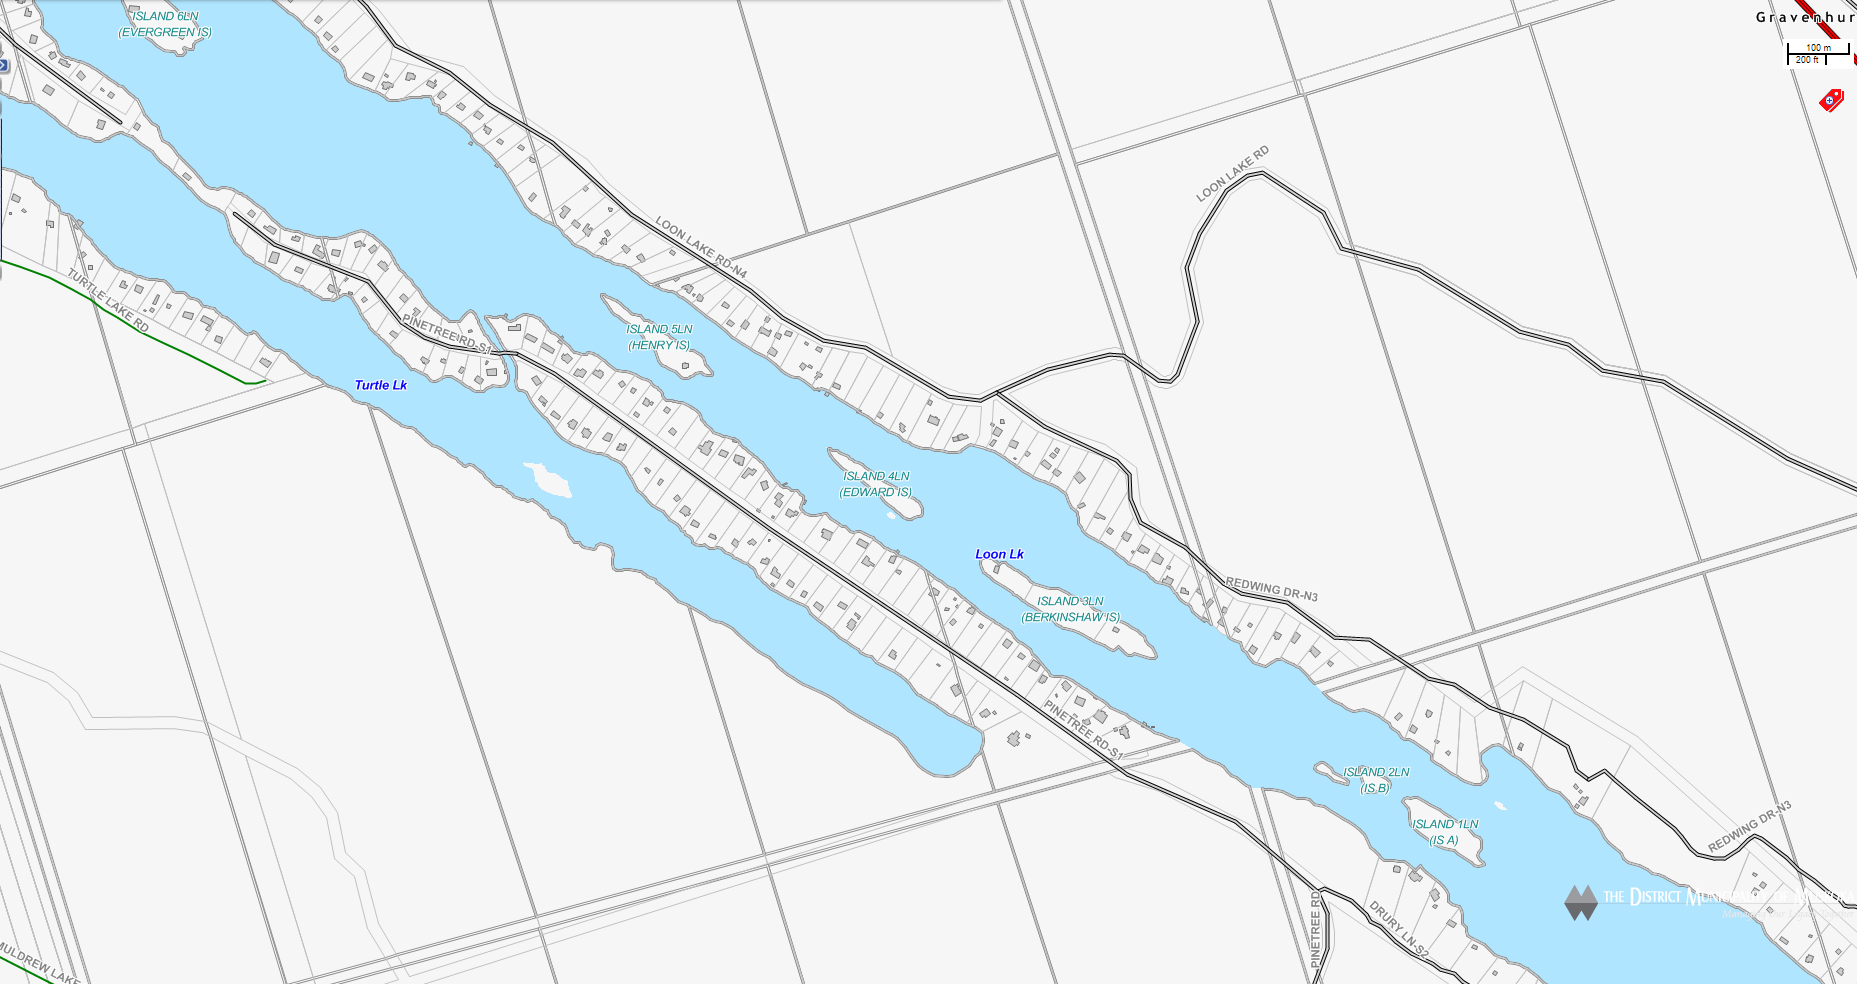 Myers Lake Cadastral Map - Myers Lake - Muskoka